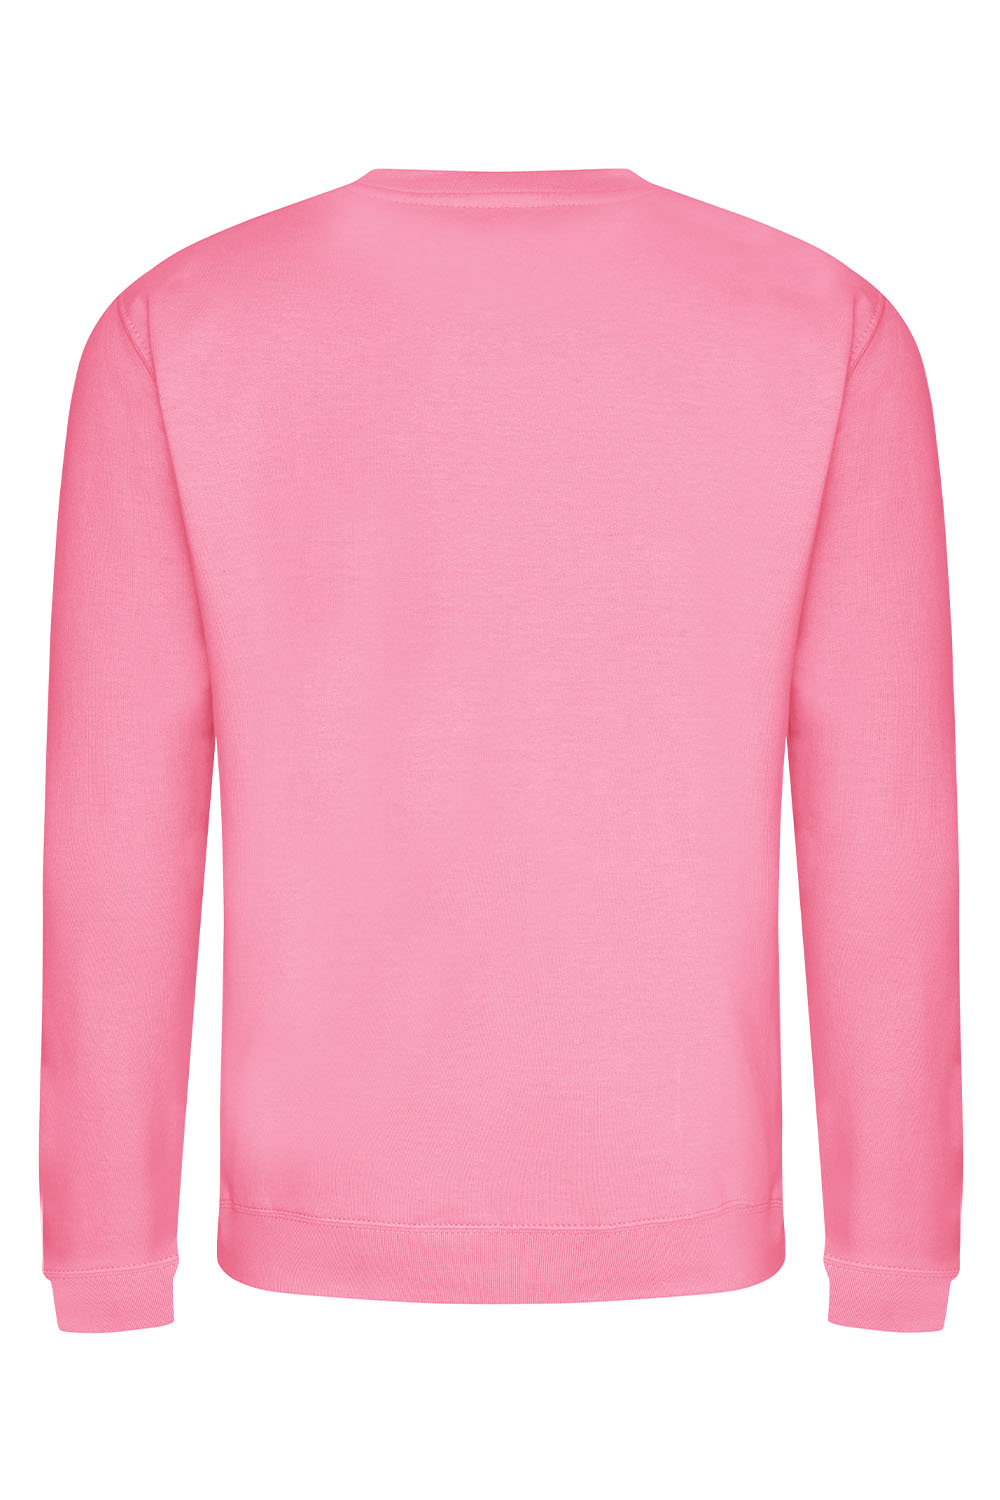 Manhattan Sweatshirt In Candy Floss Pink(CUSTOM PACKS)